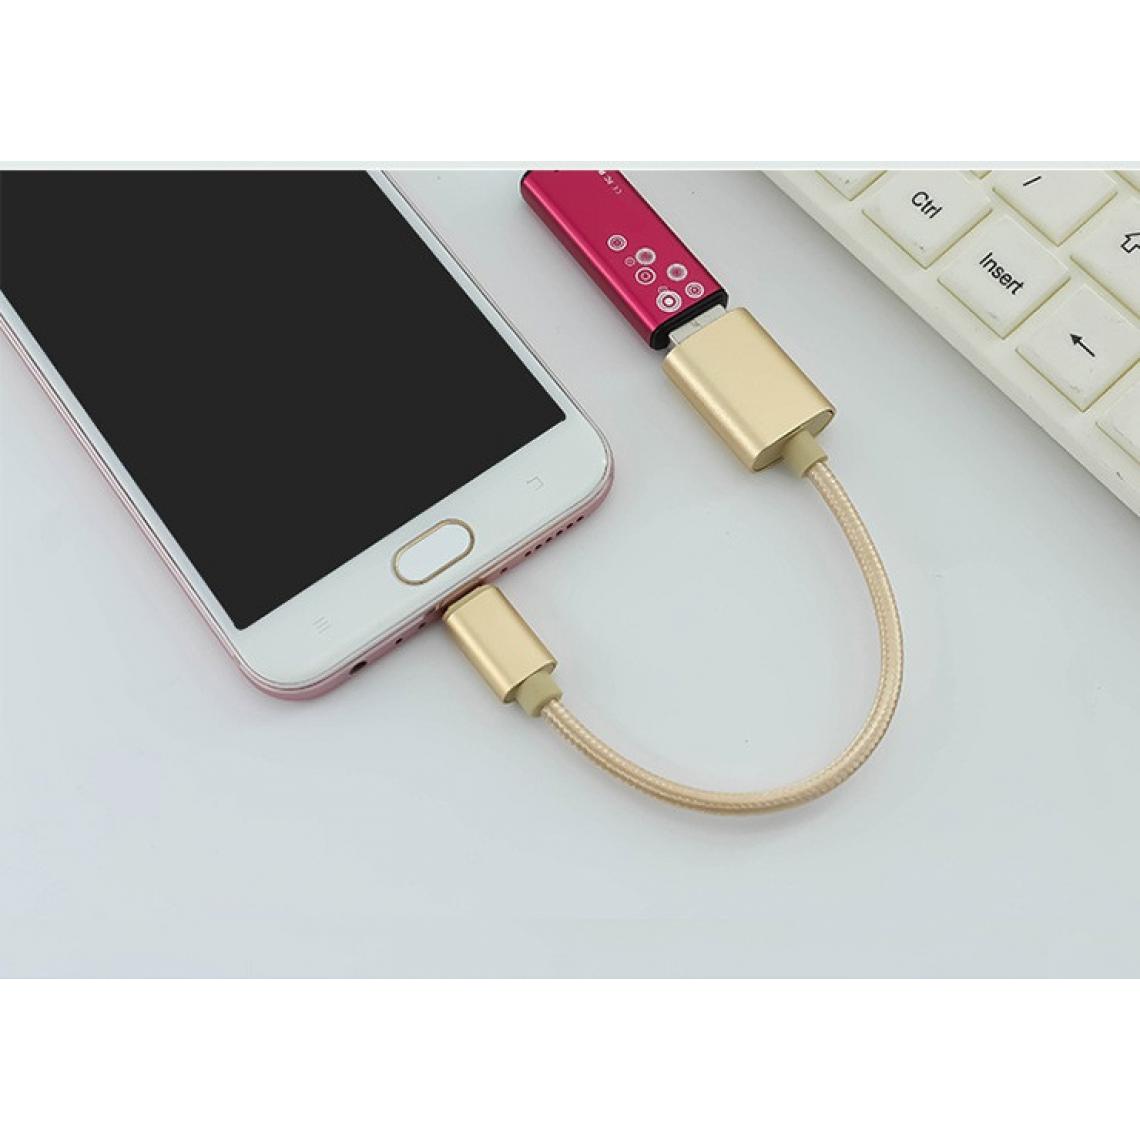 Shot - Adaptateur Type C/USB pour HUAWEI Mate 20 X Smartphone & MAC USB-C Clef (OR) - Autres accessoires smartphone